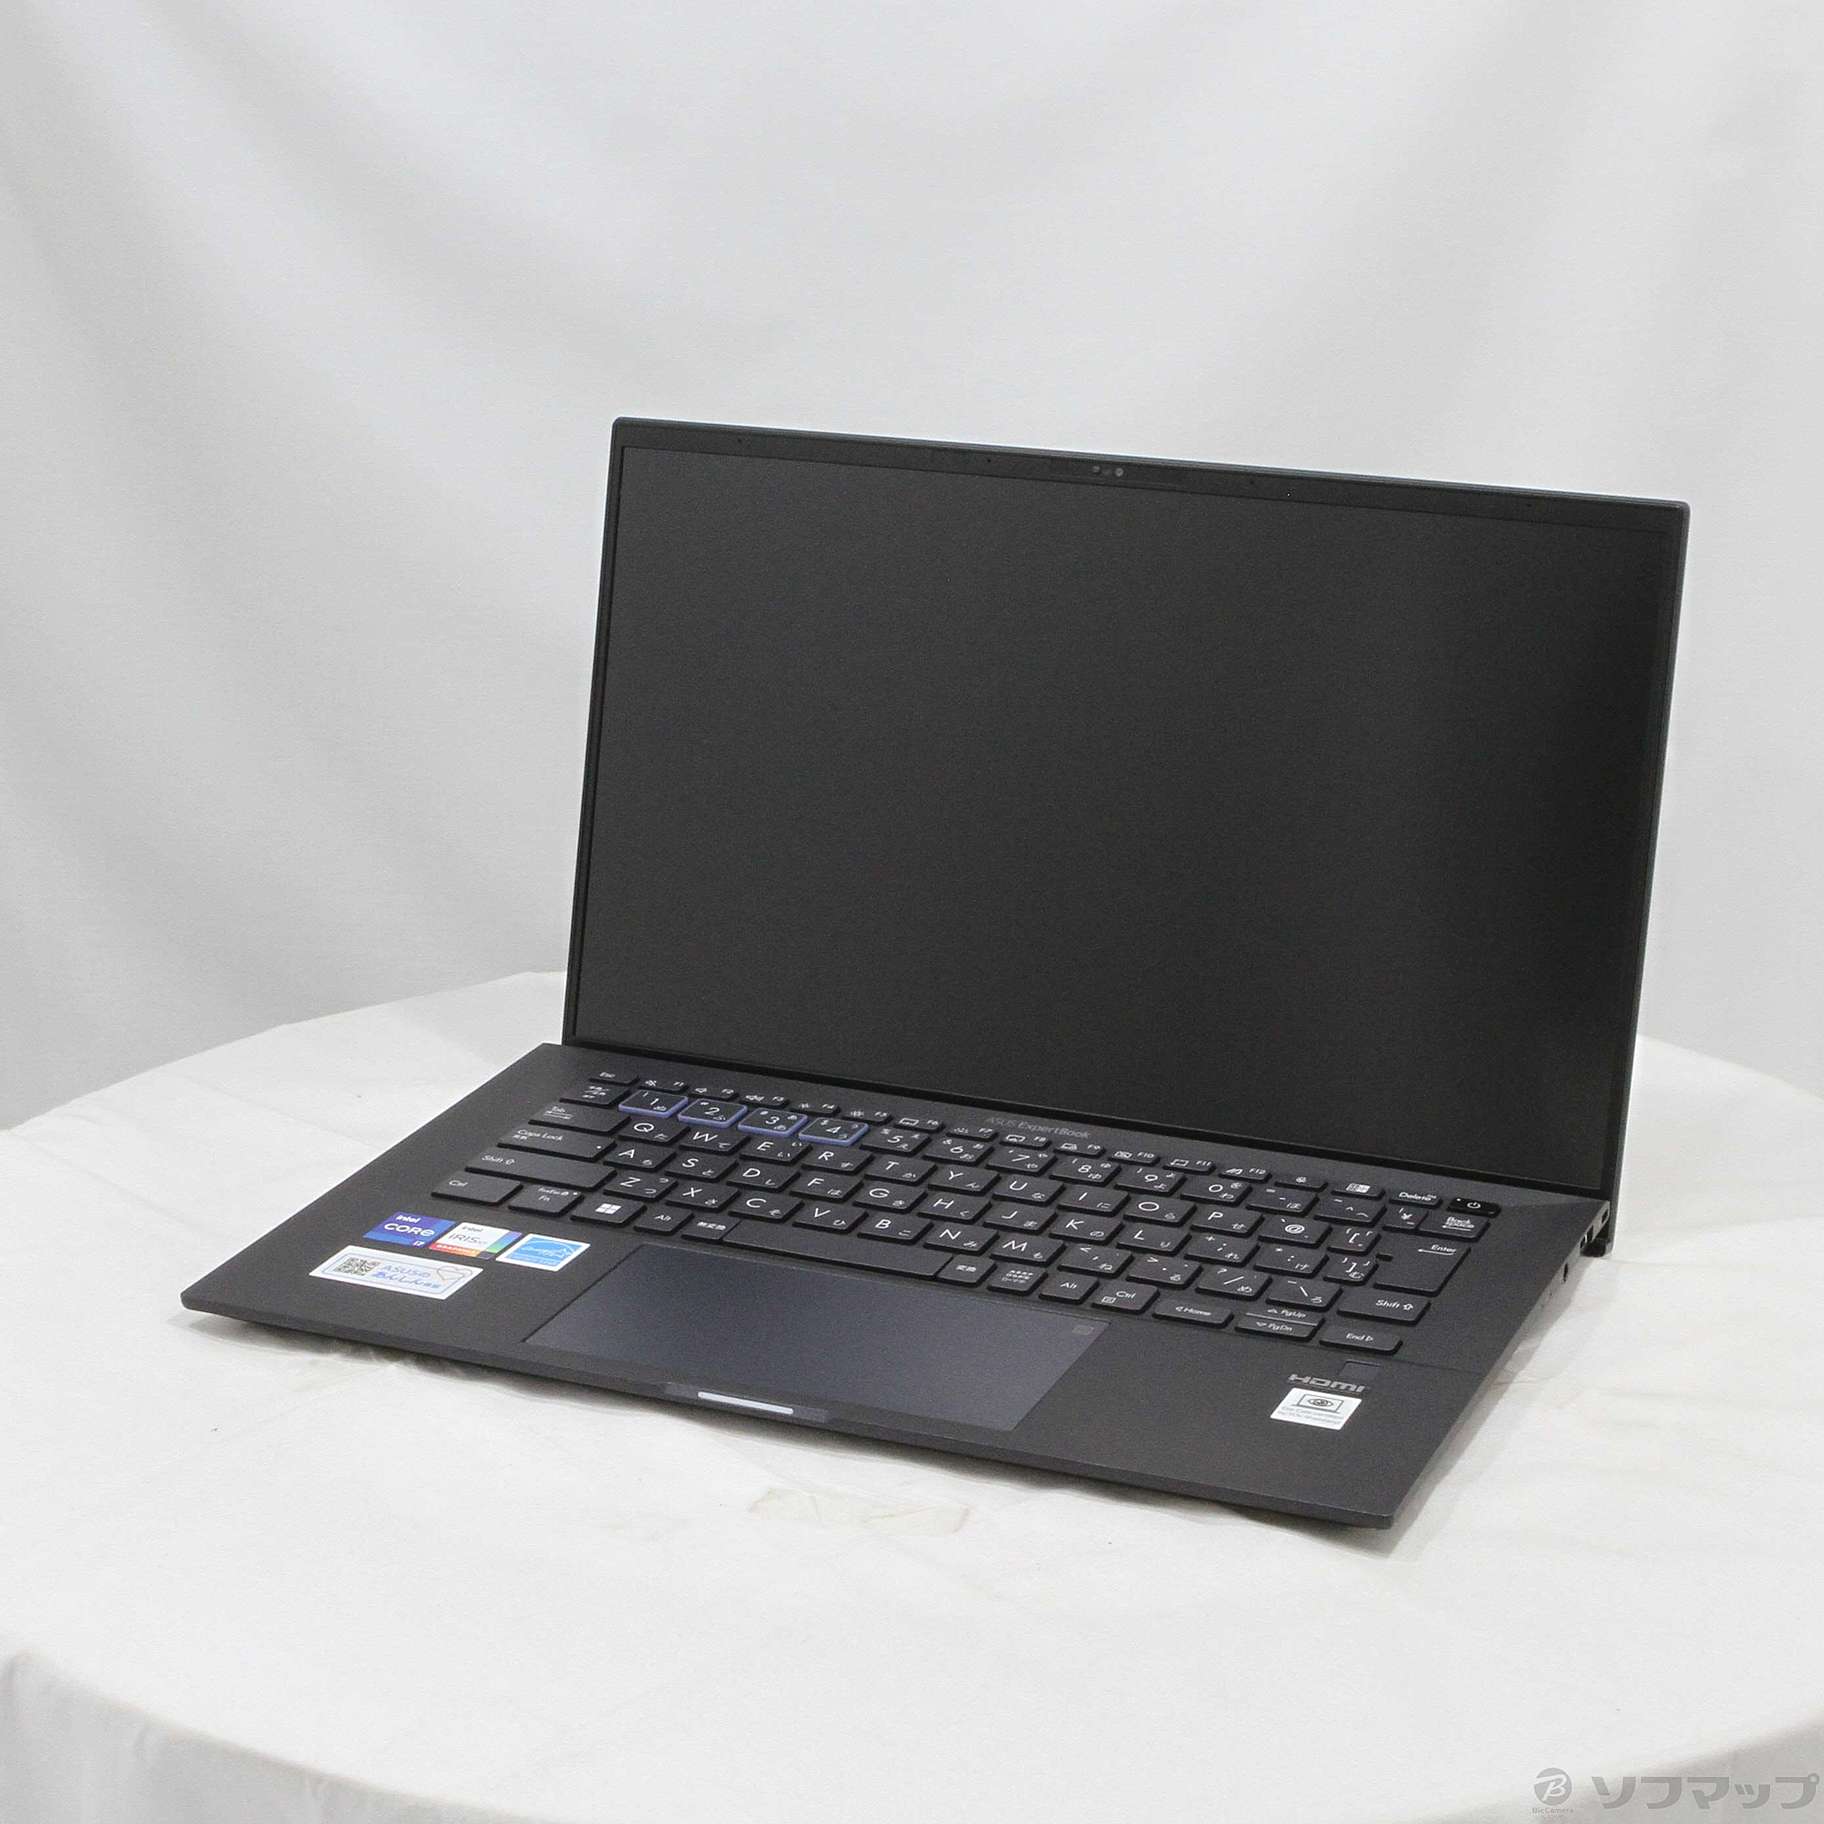 価格.com - ASUS VivoBook E203NA E203NA-232 価格比較